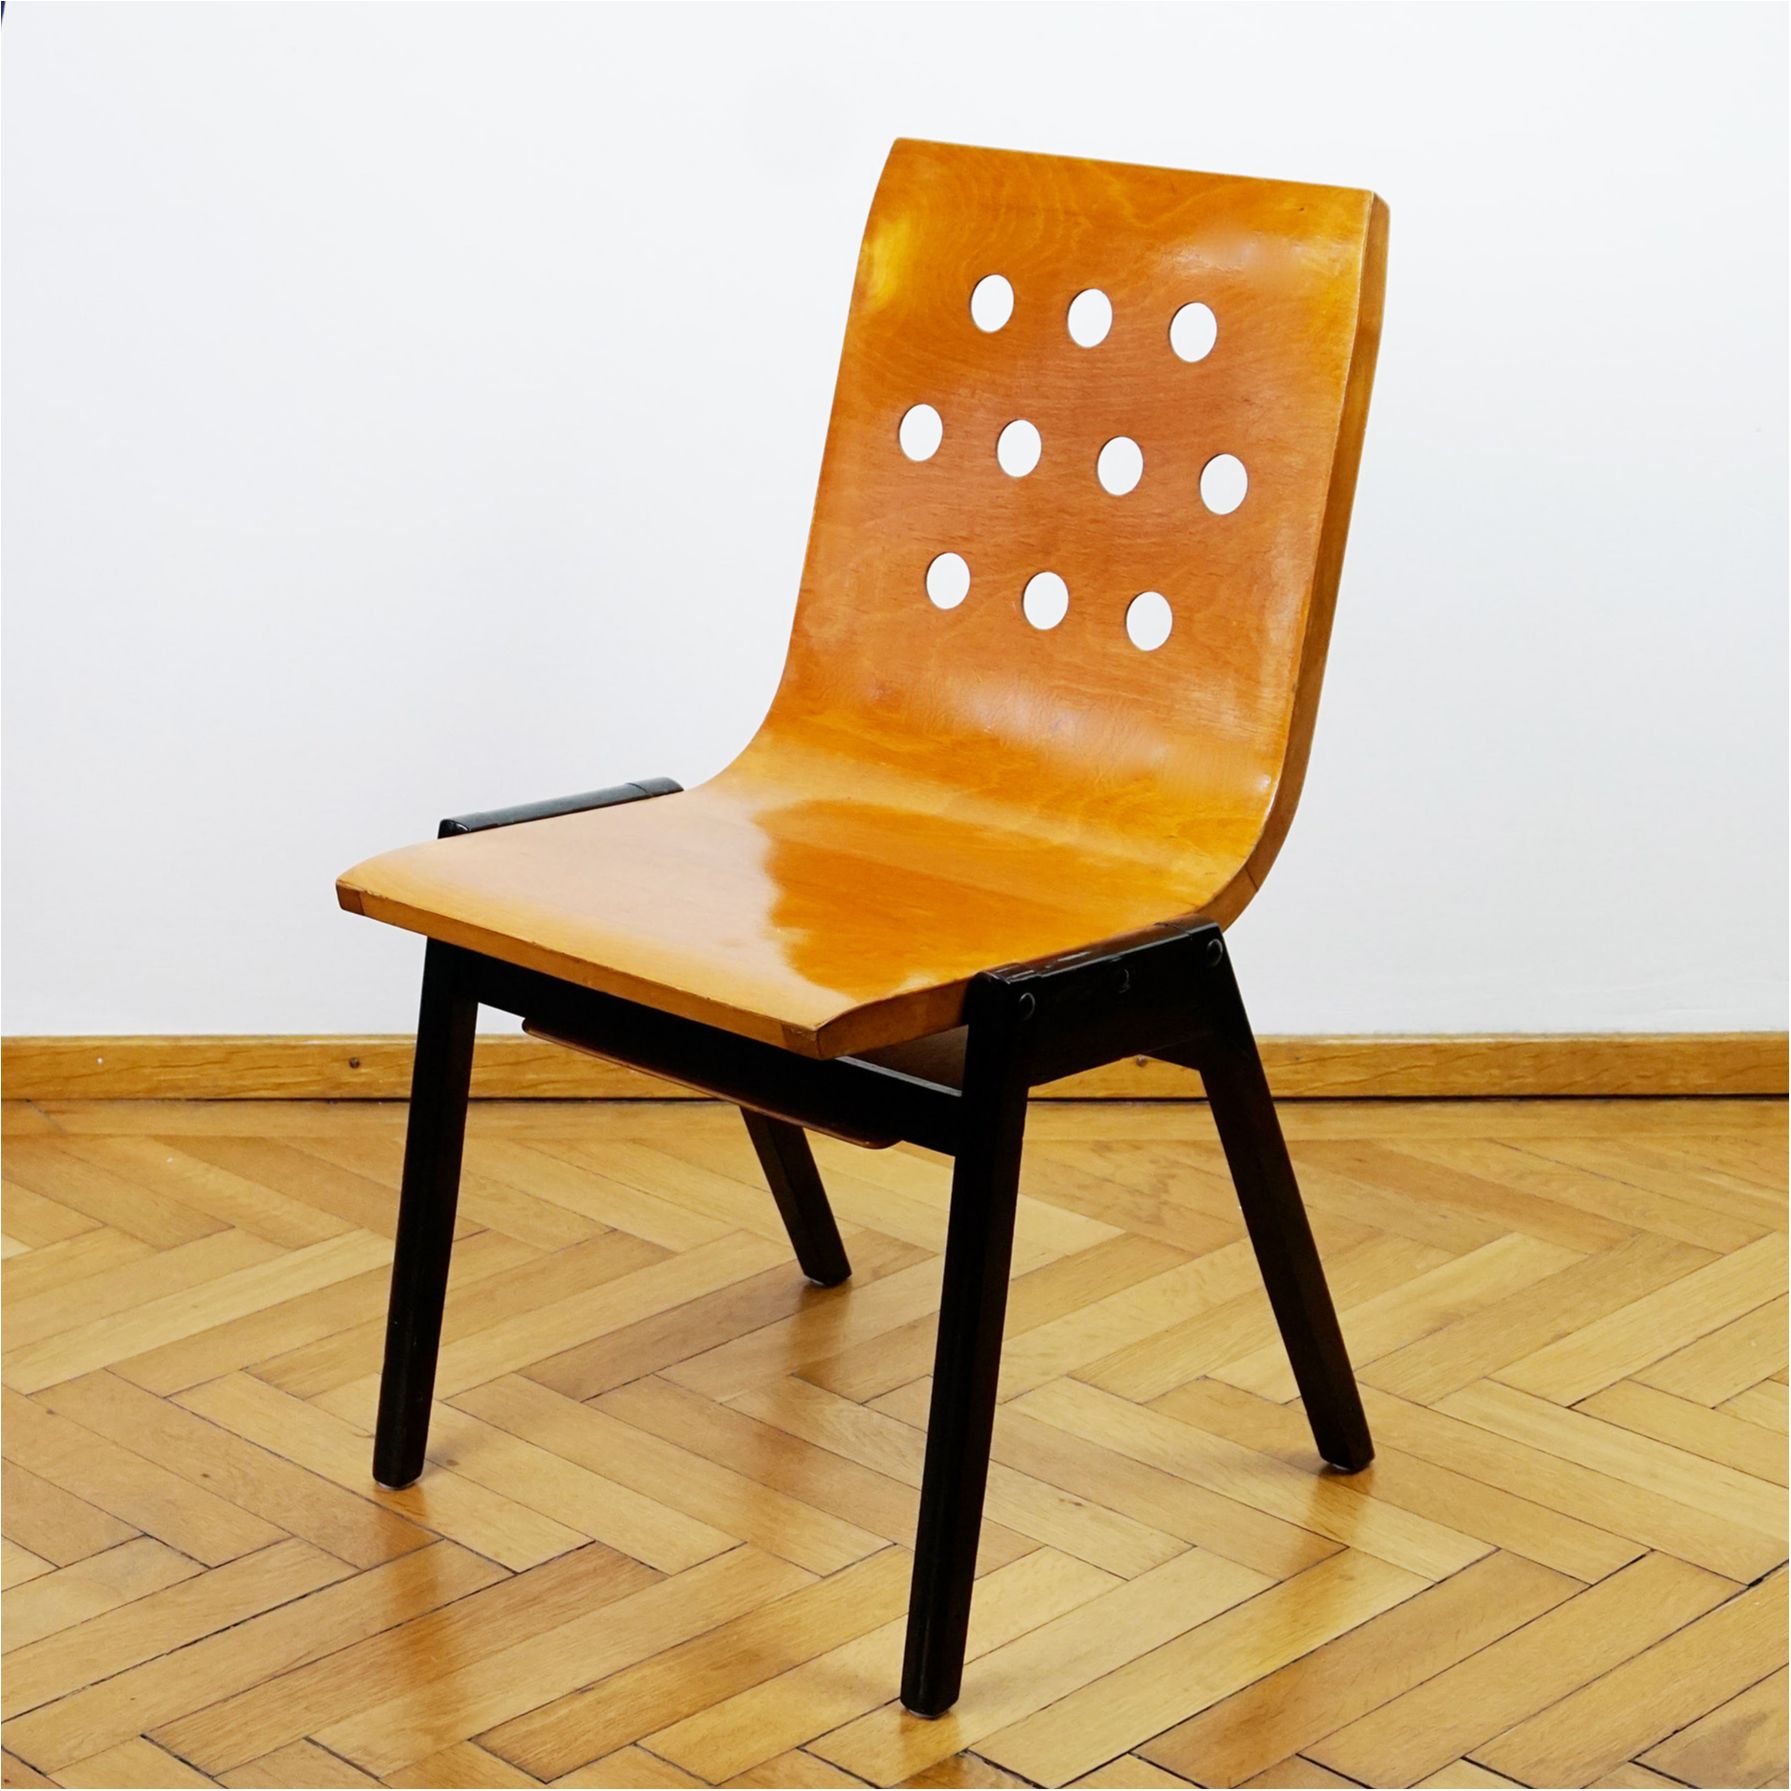 Set of COLISÉE chairs